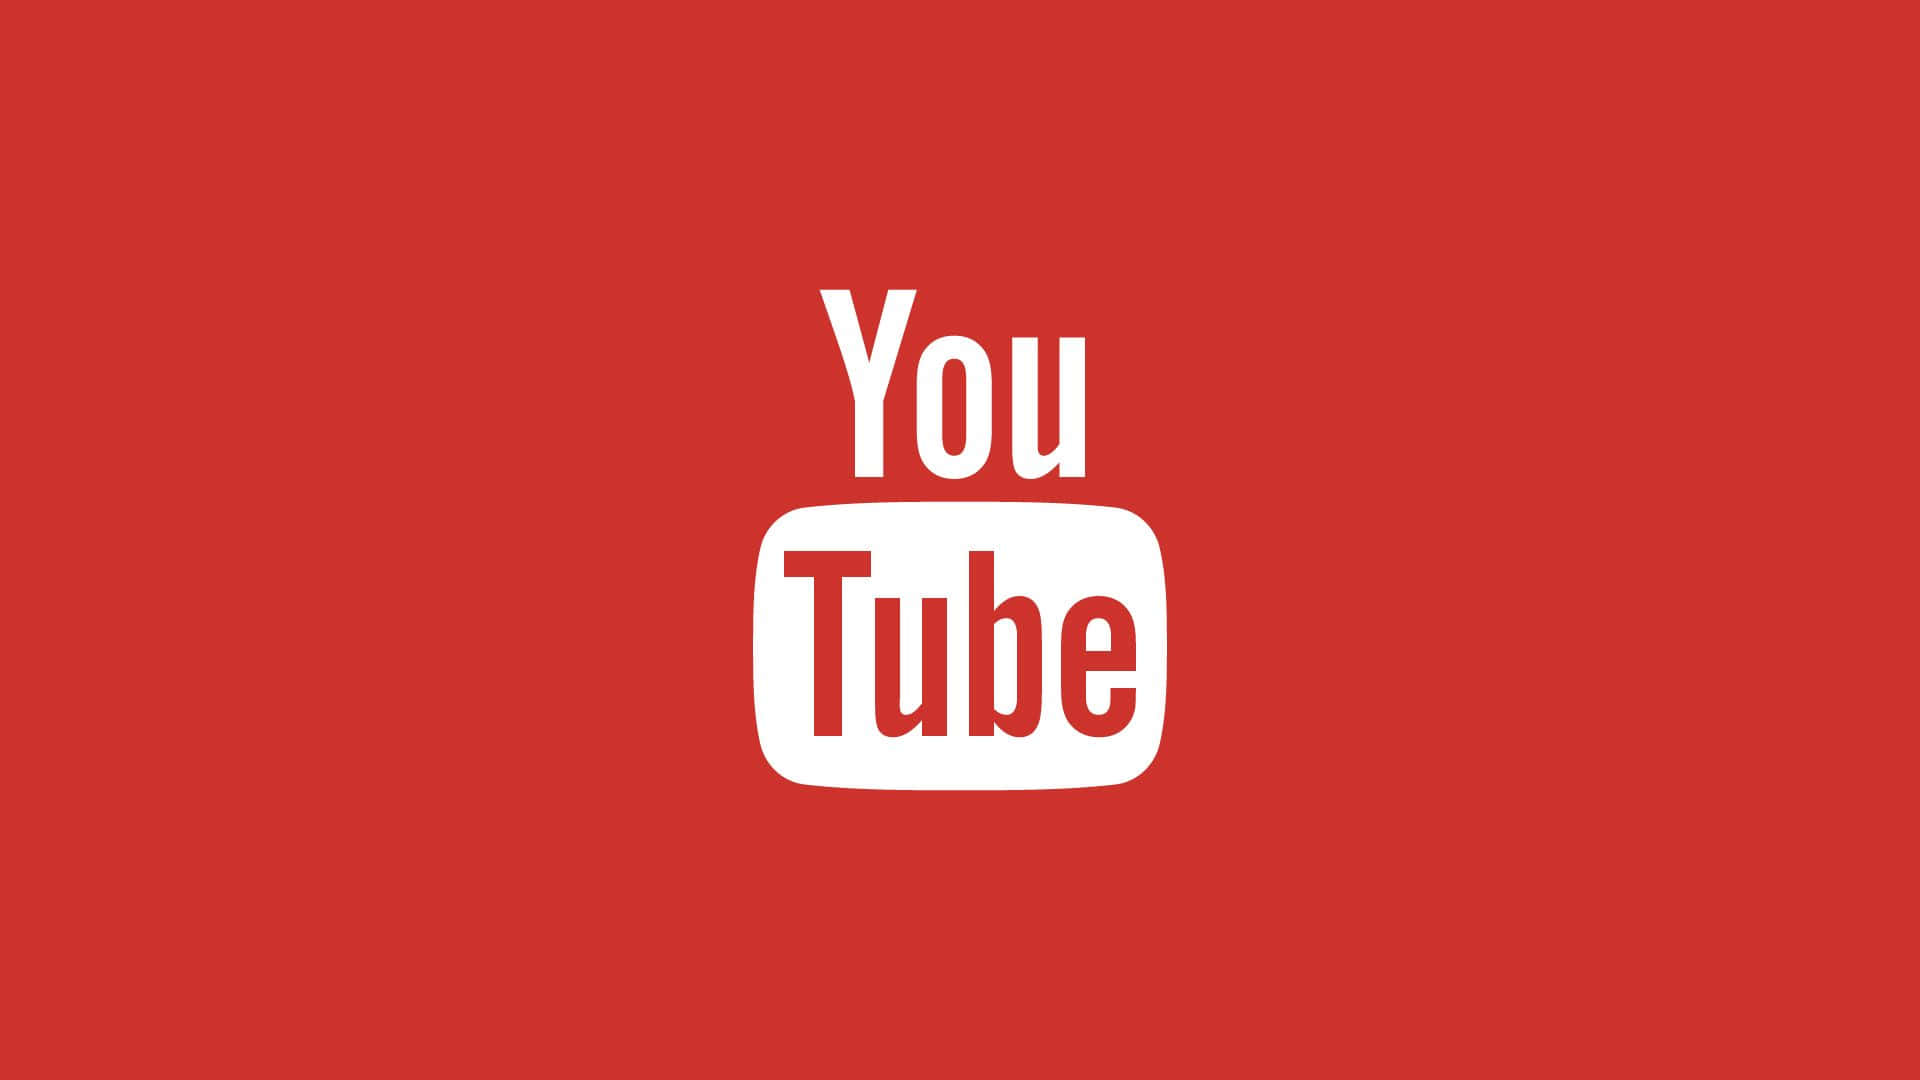 Fondode Pantalla Con El Vibrante Logotipo De Youtube.